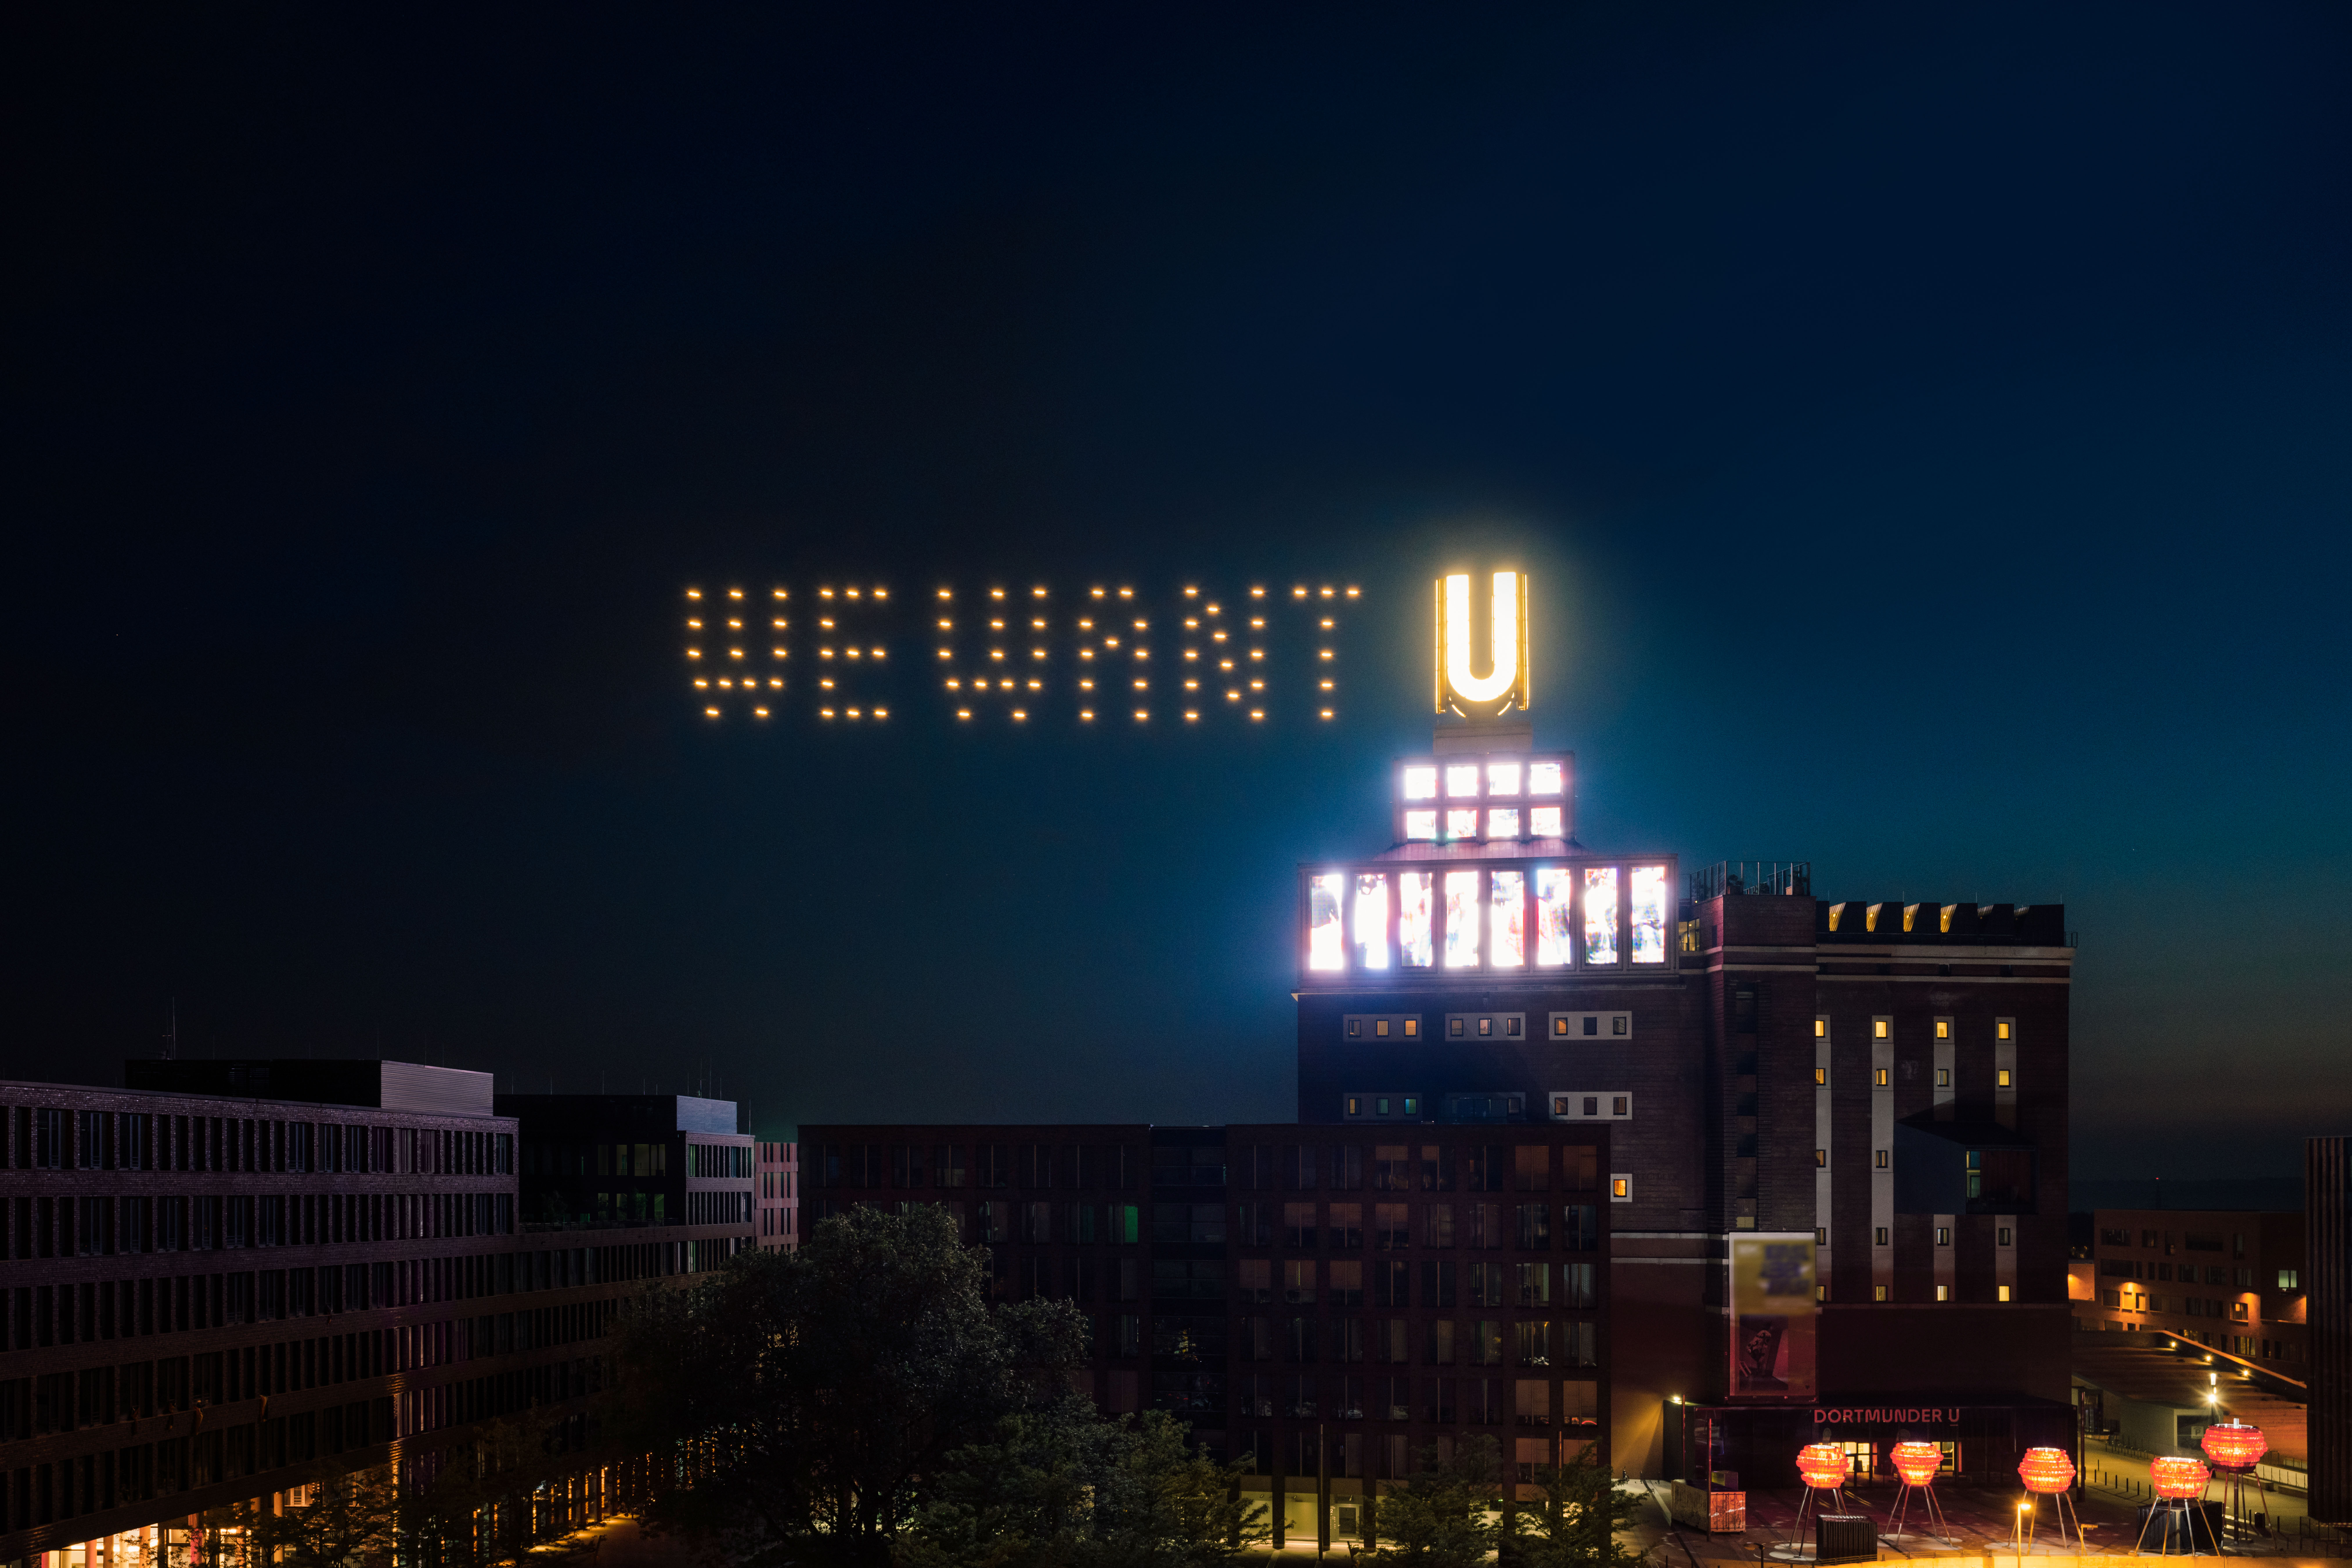 Schriftzug "We want" mit dem Dortmunder "U"